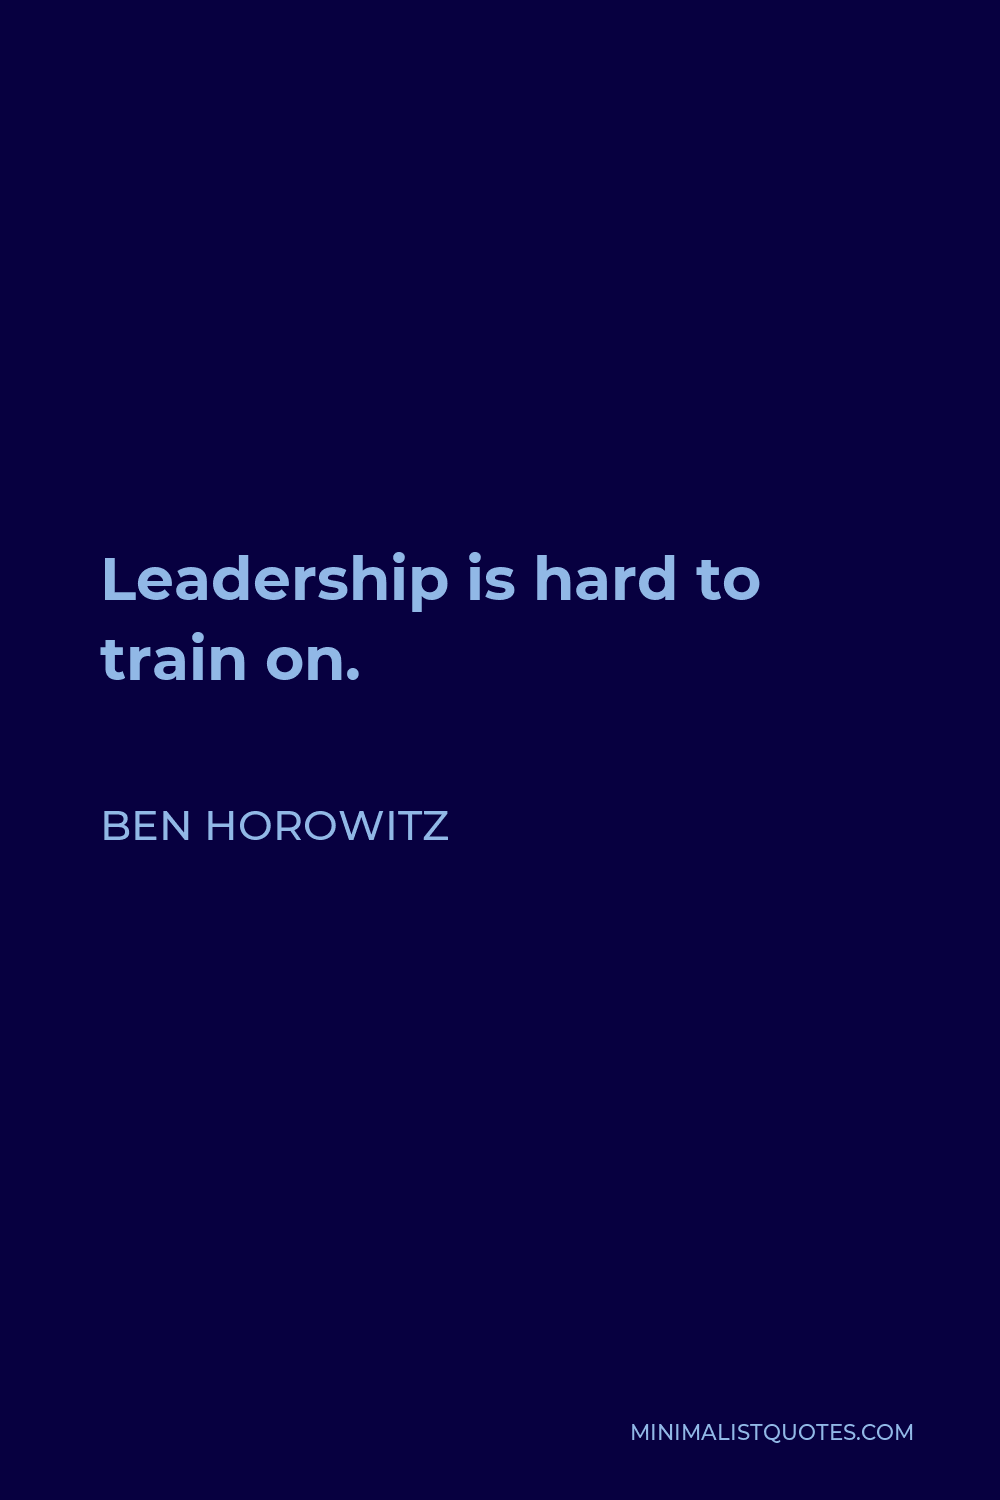 Ben Horowitz Quote - Leadership is hard to train on.